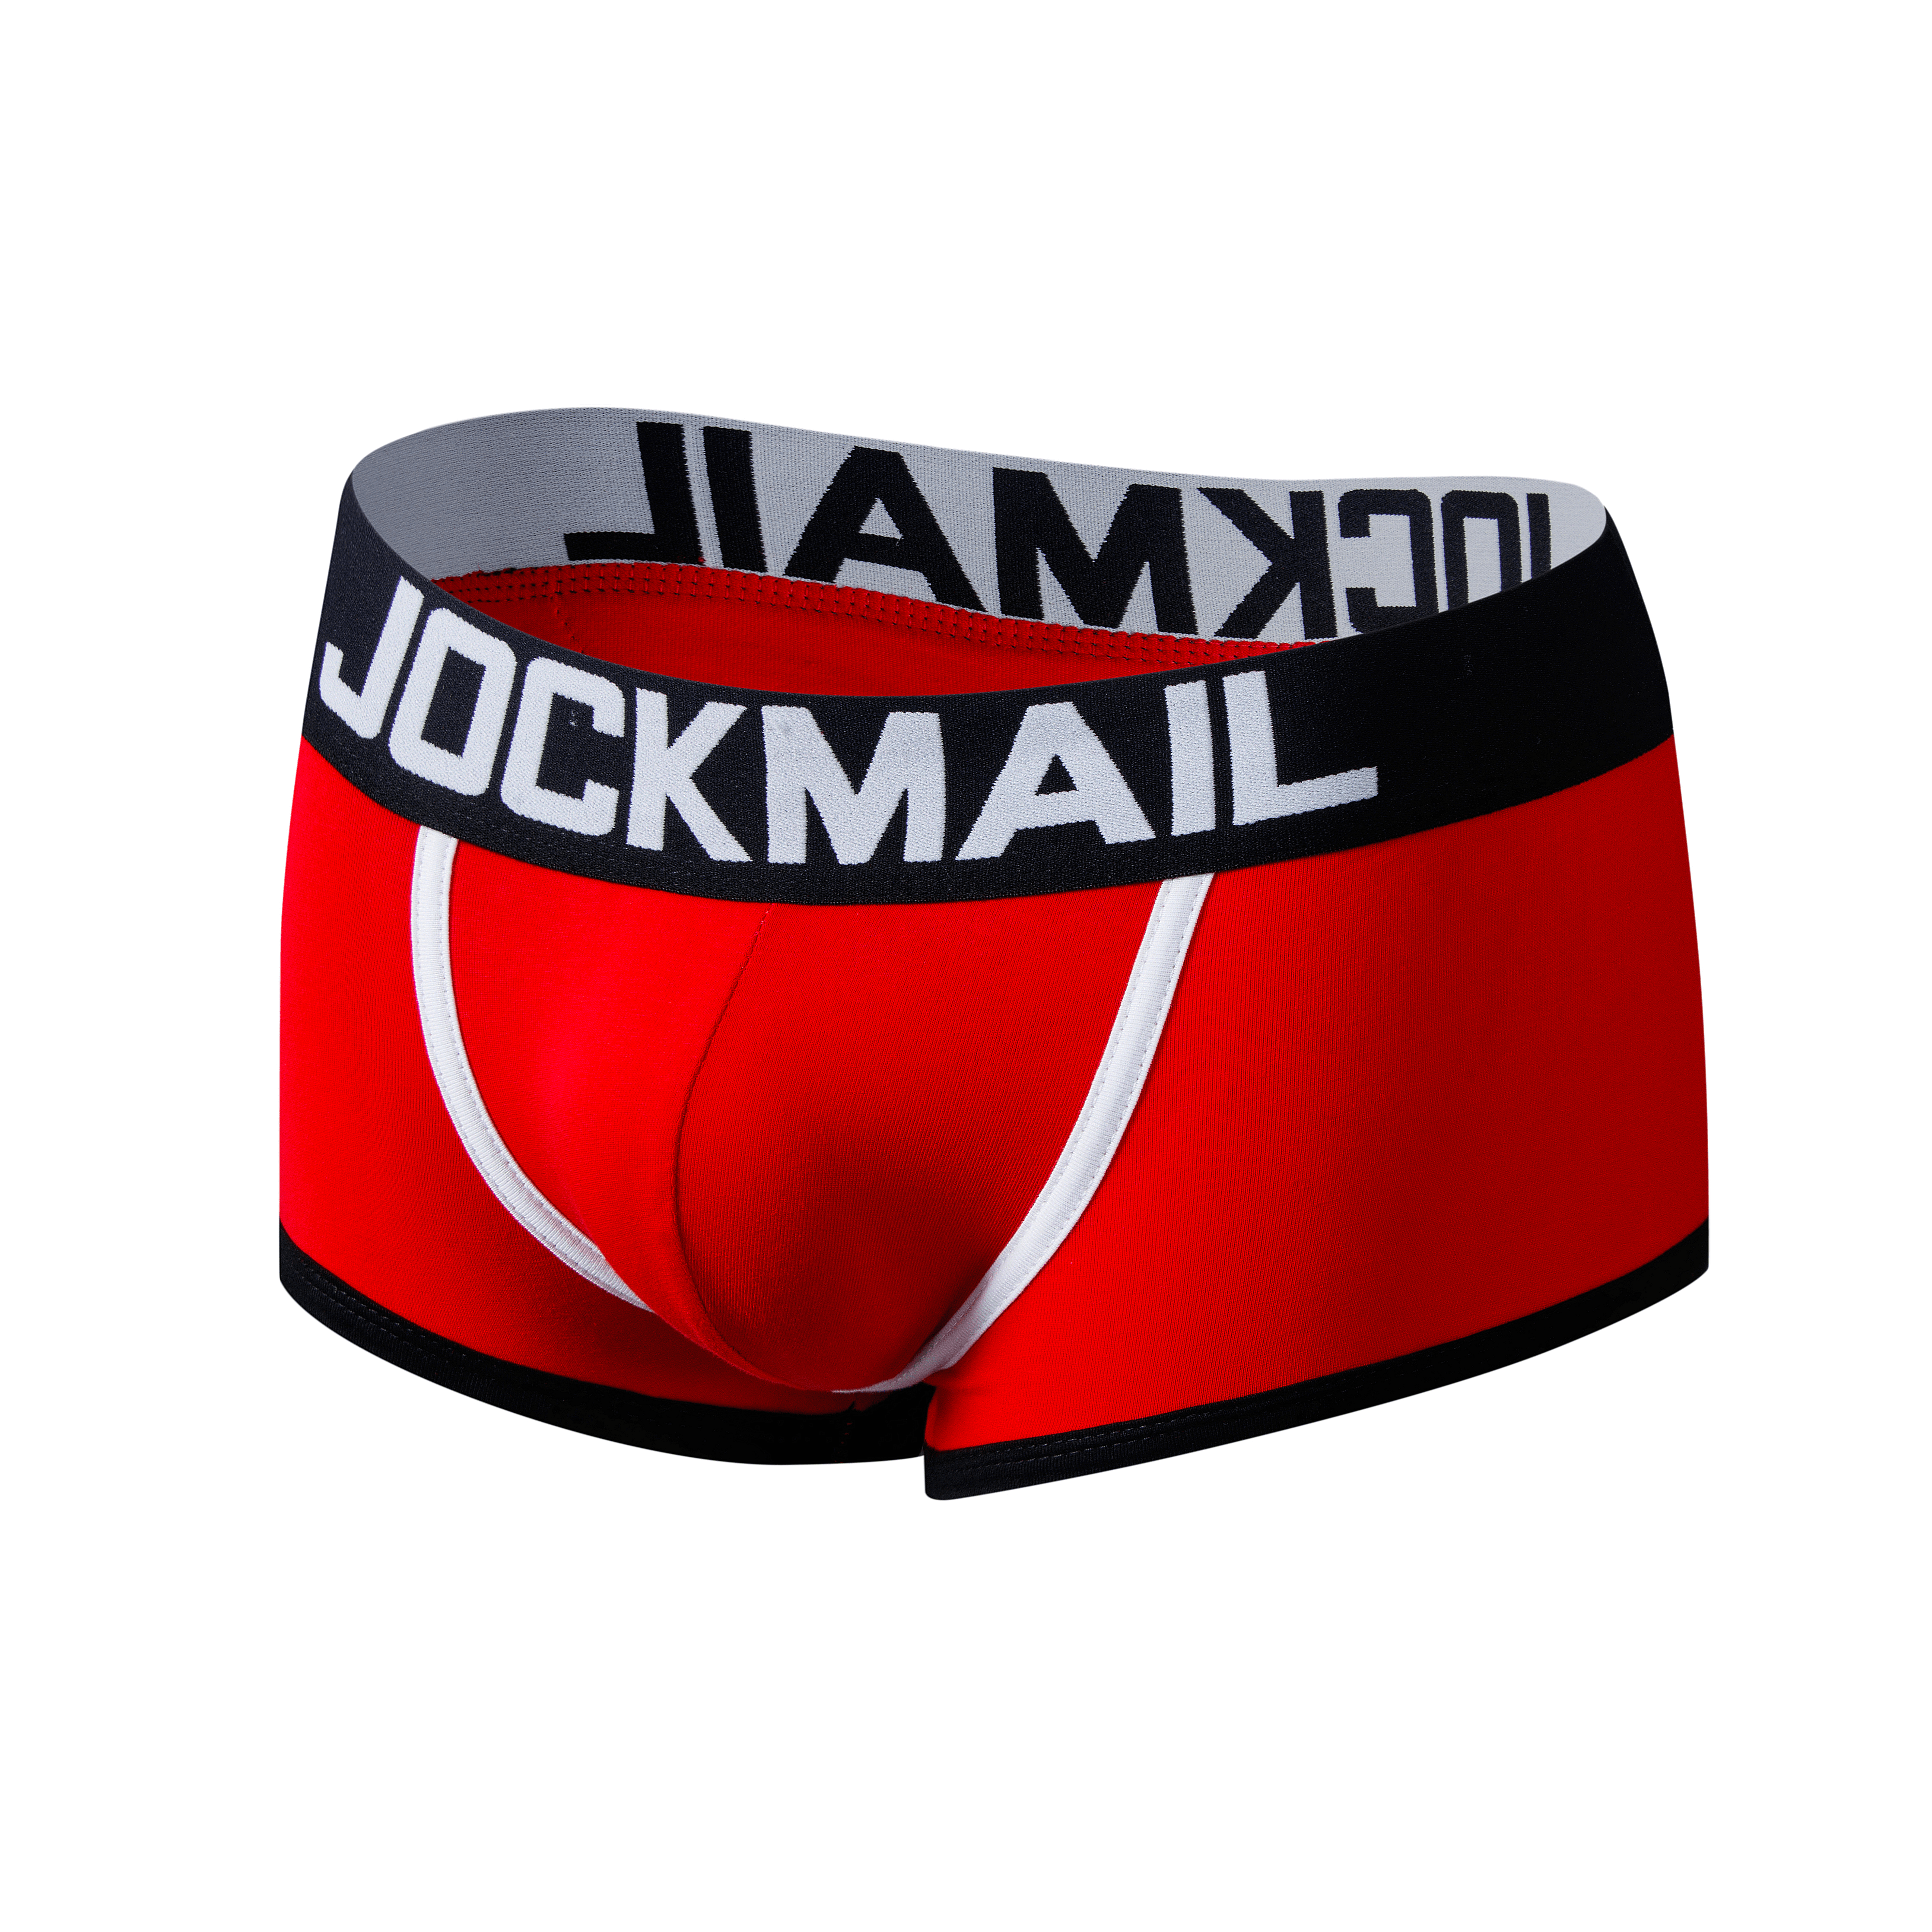 Men's JOCKMAIL JM408 - Backless Boxer - JOCKMAIL